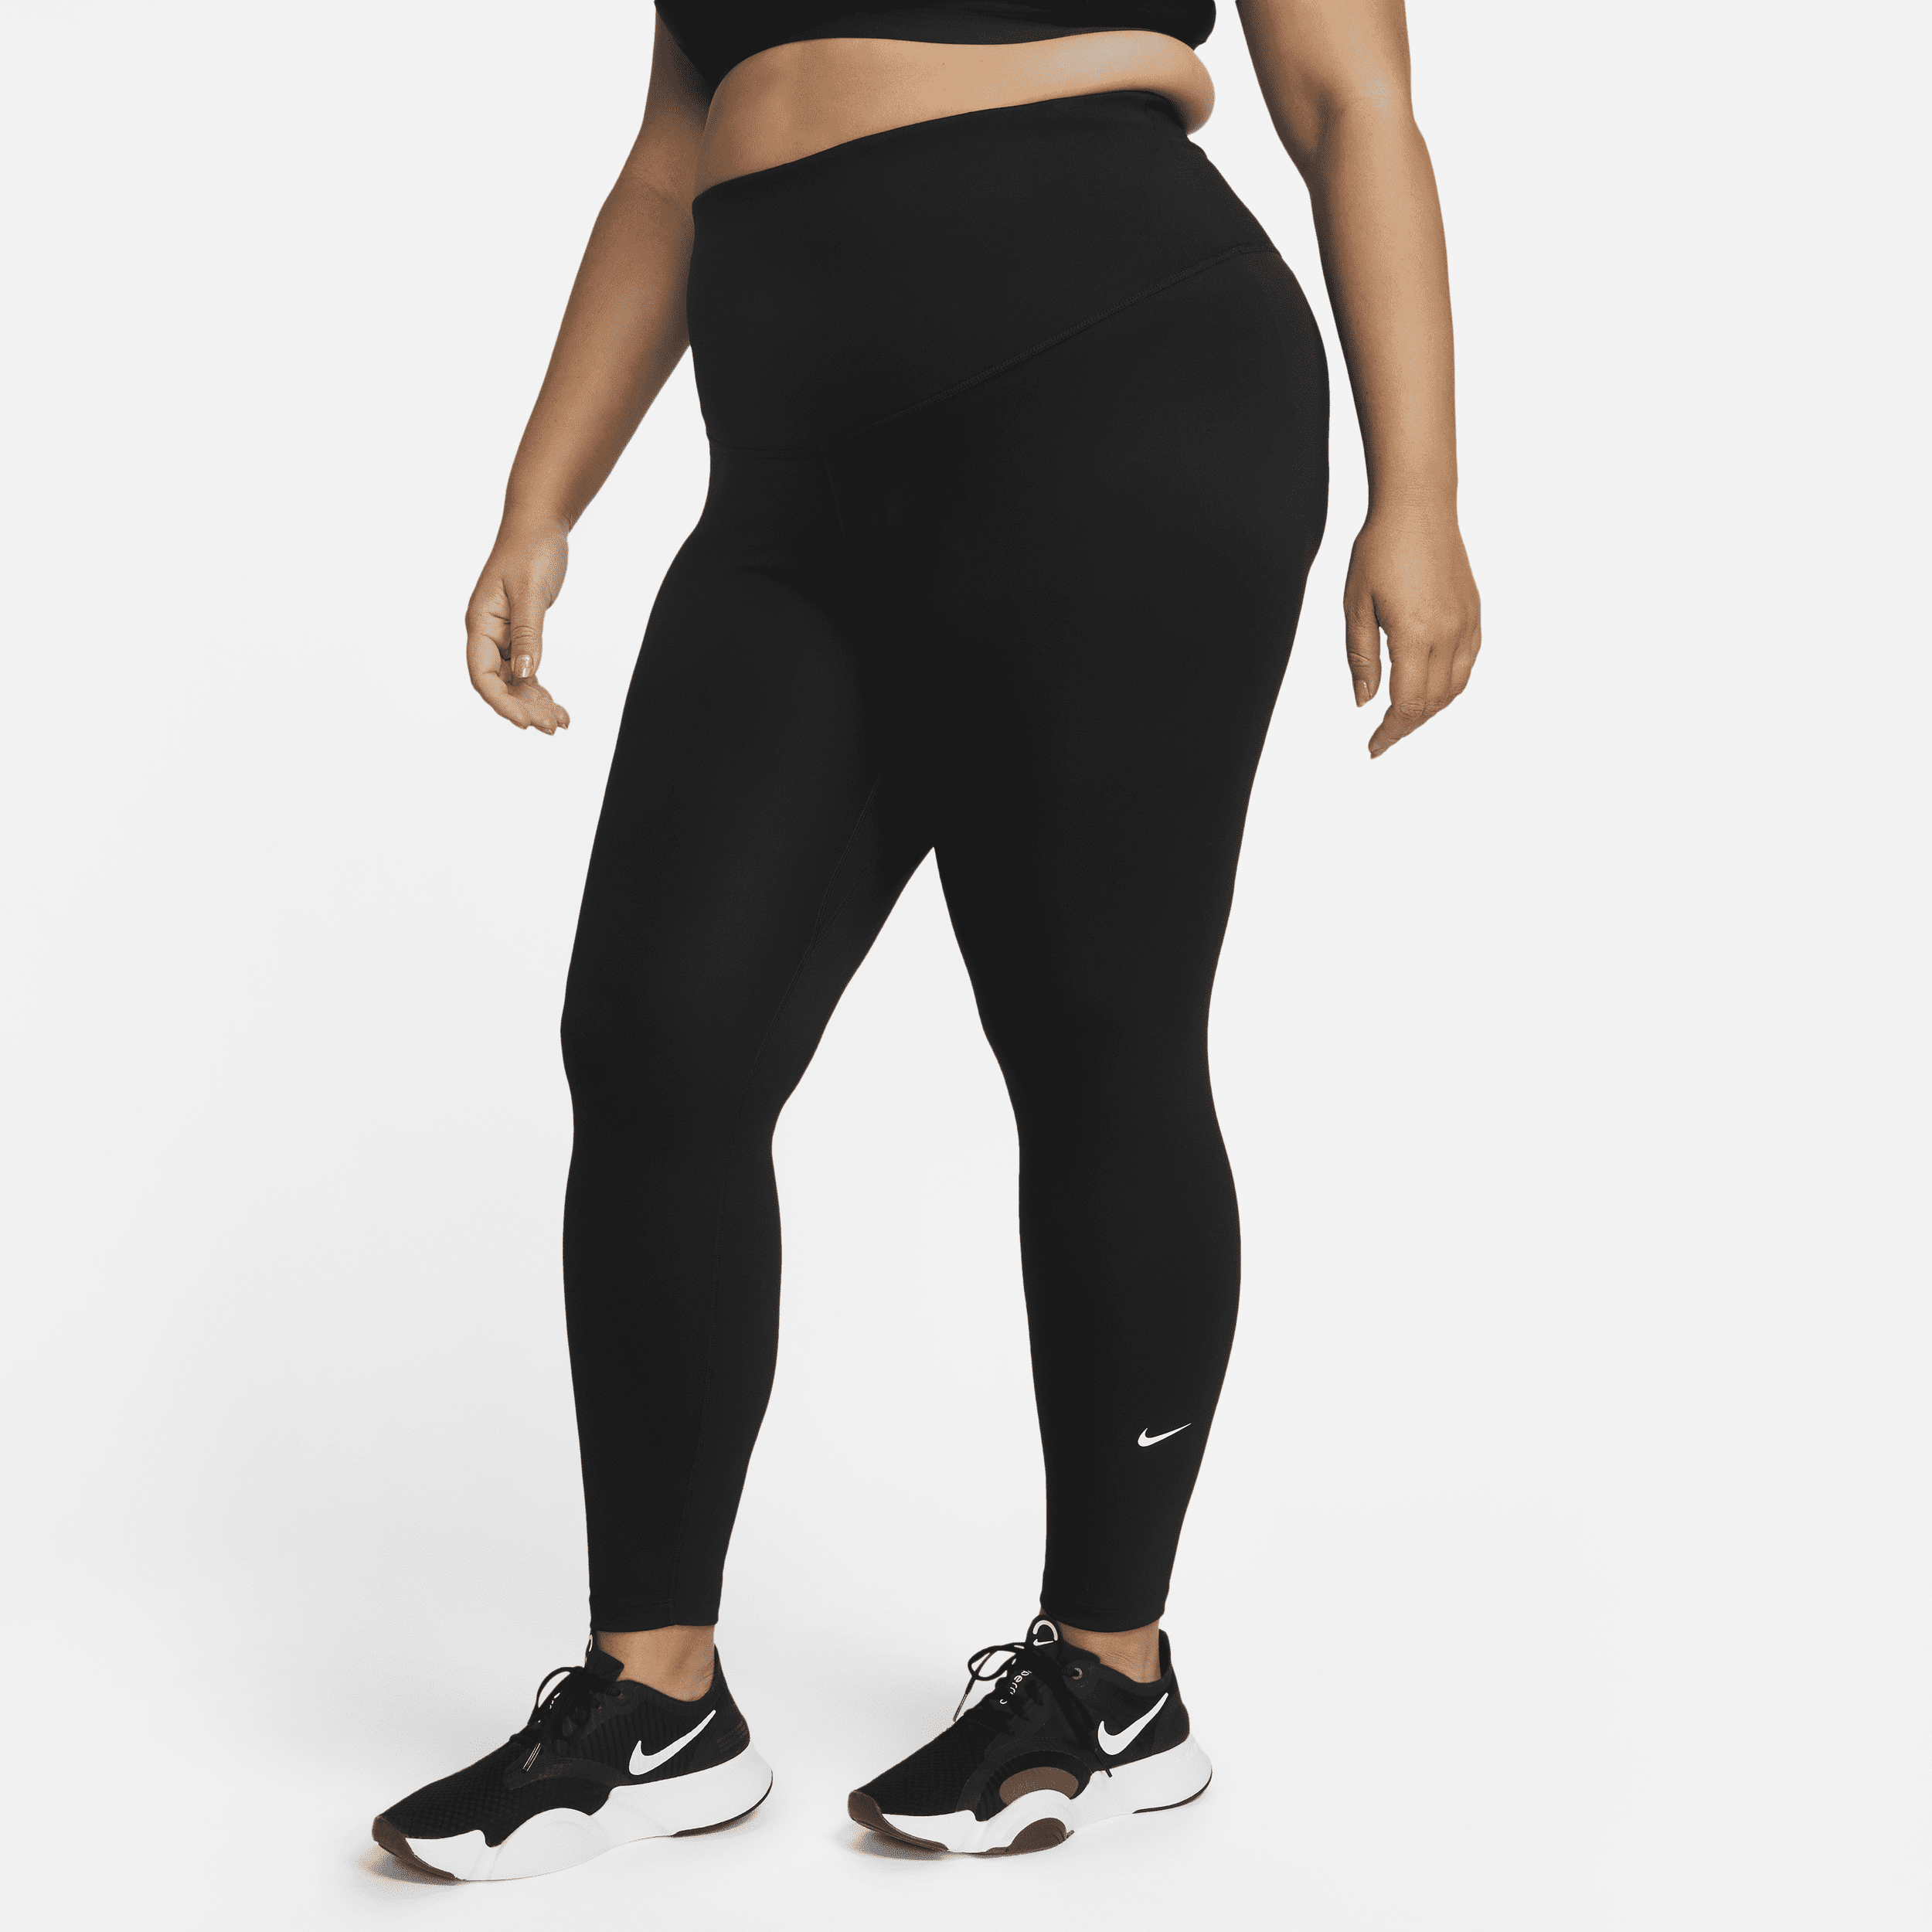 Leggings a vita alta Nike One – Donna - Nero